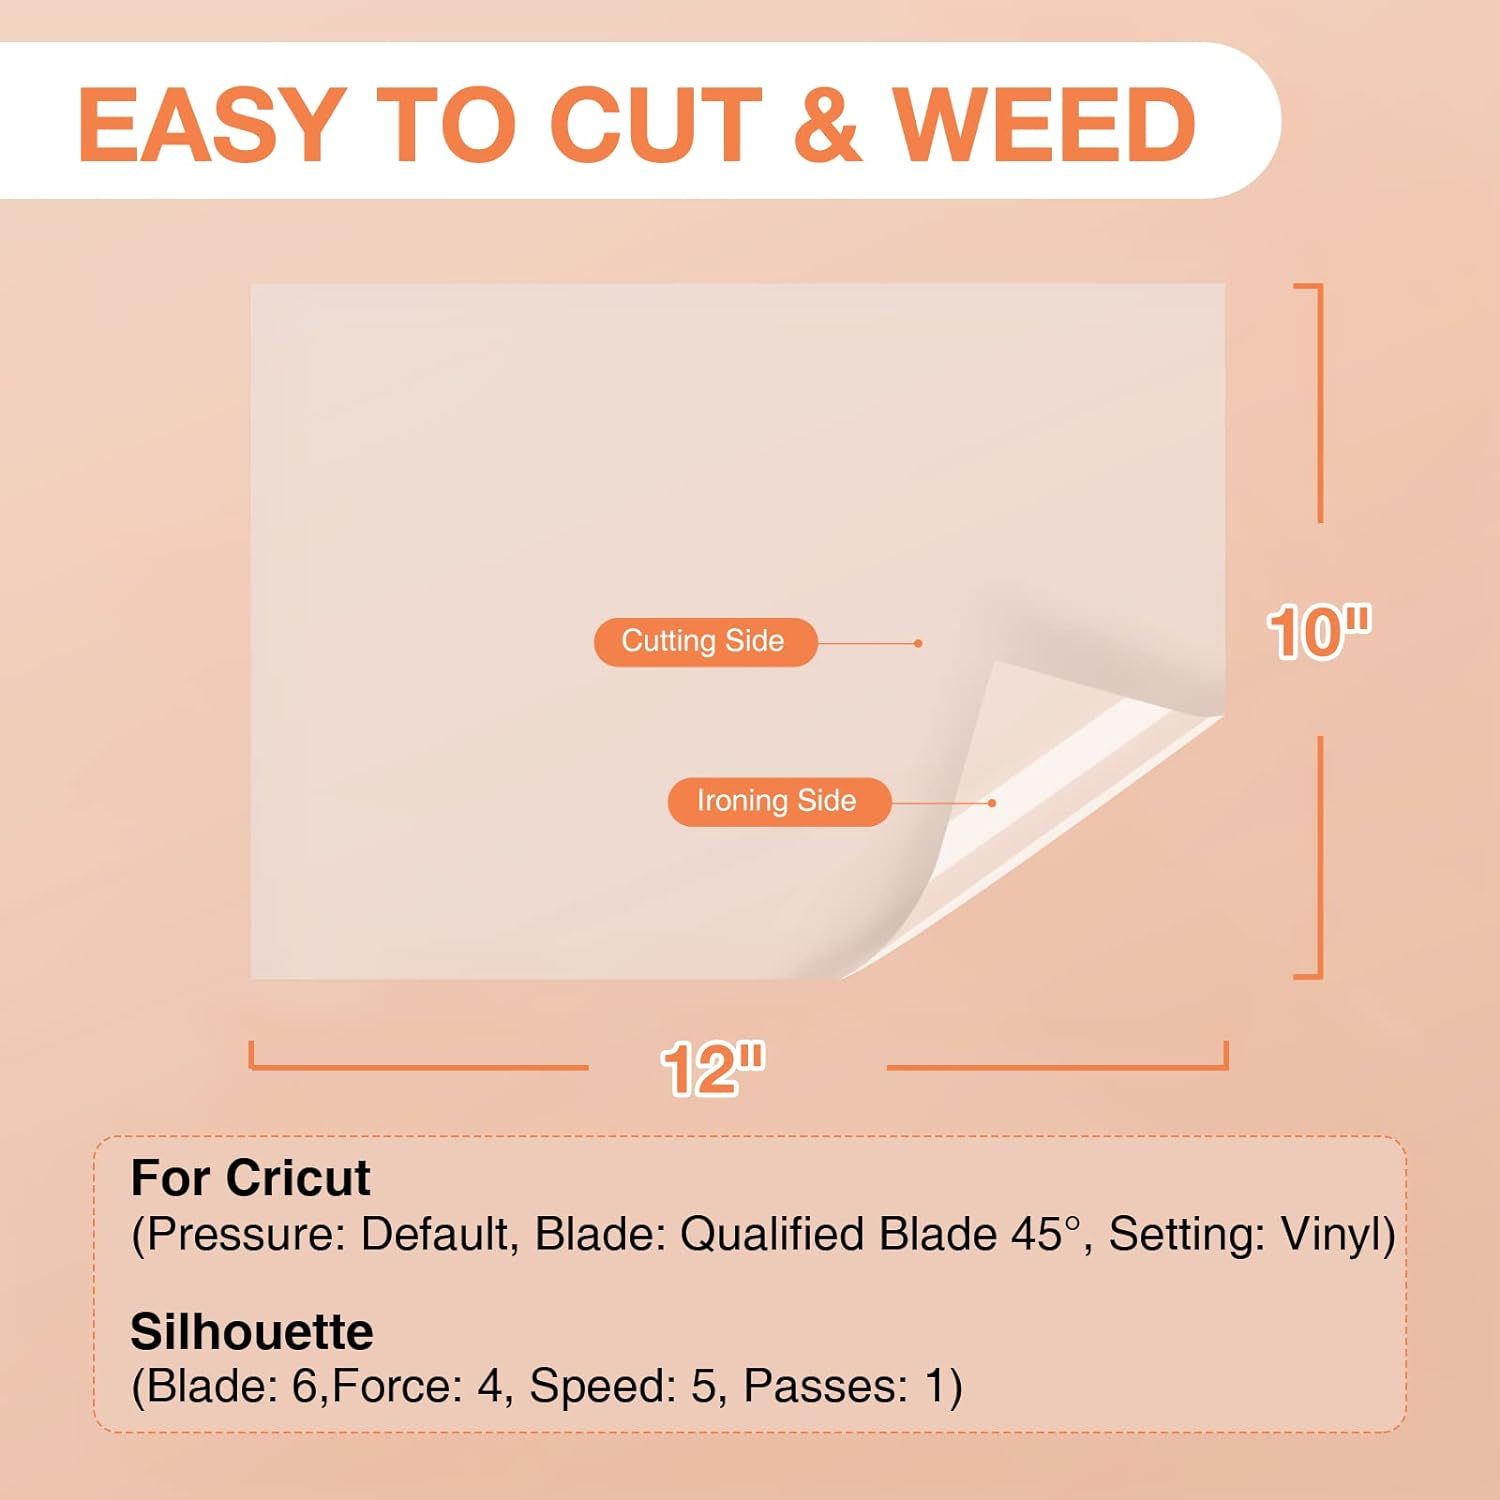 Cricut Joy Smart Permanent Vinyl - Mint, Coral, Tangerine, Lime Green